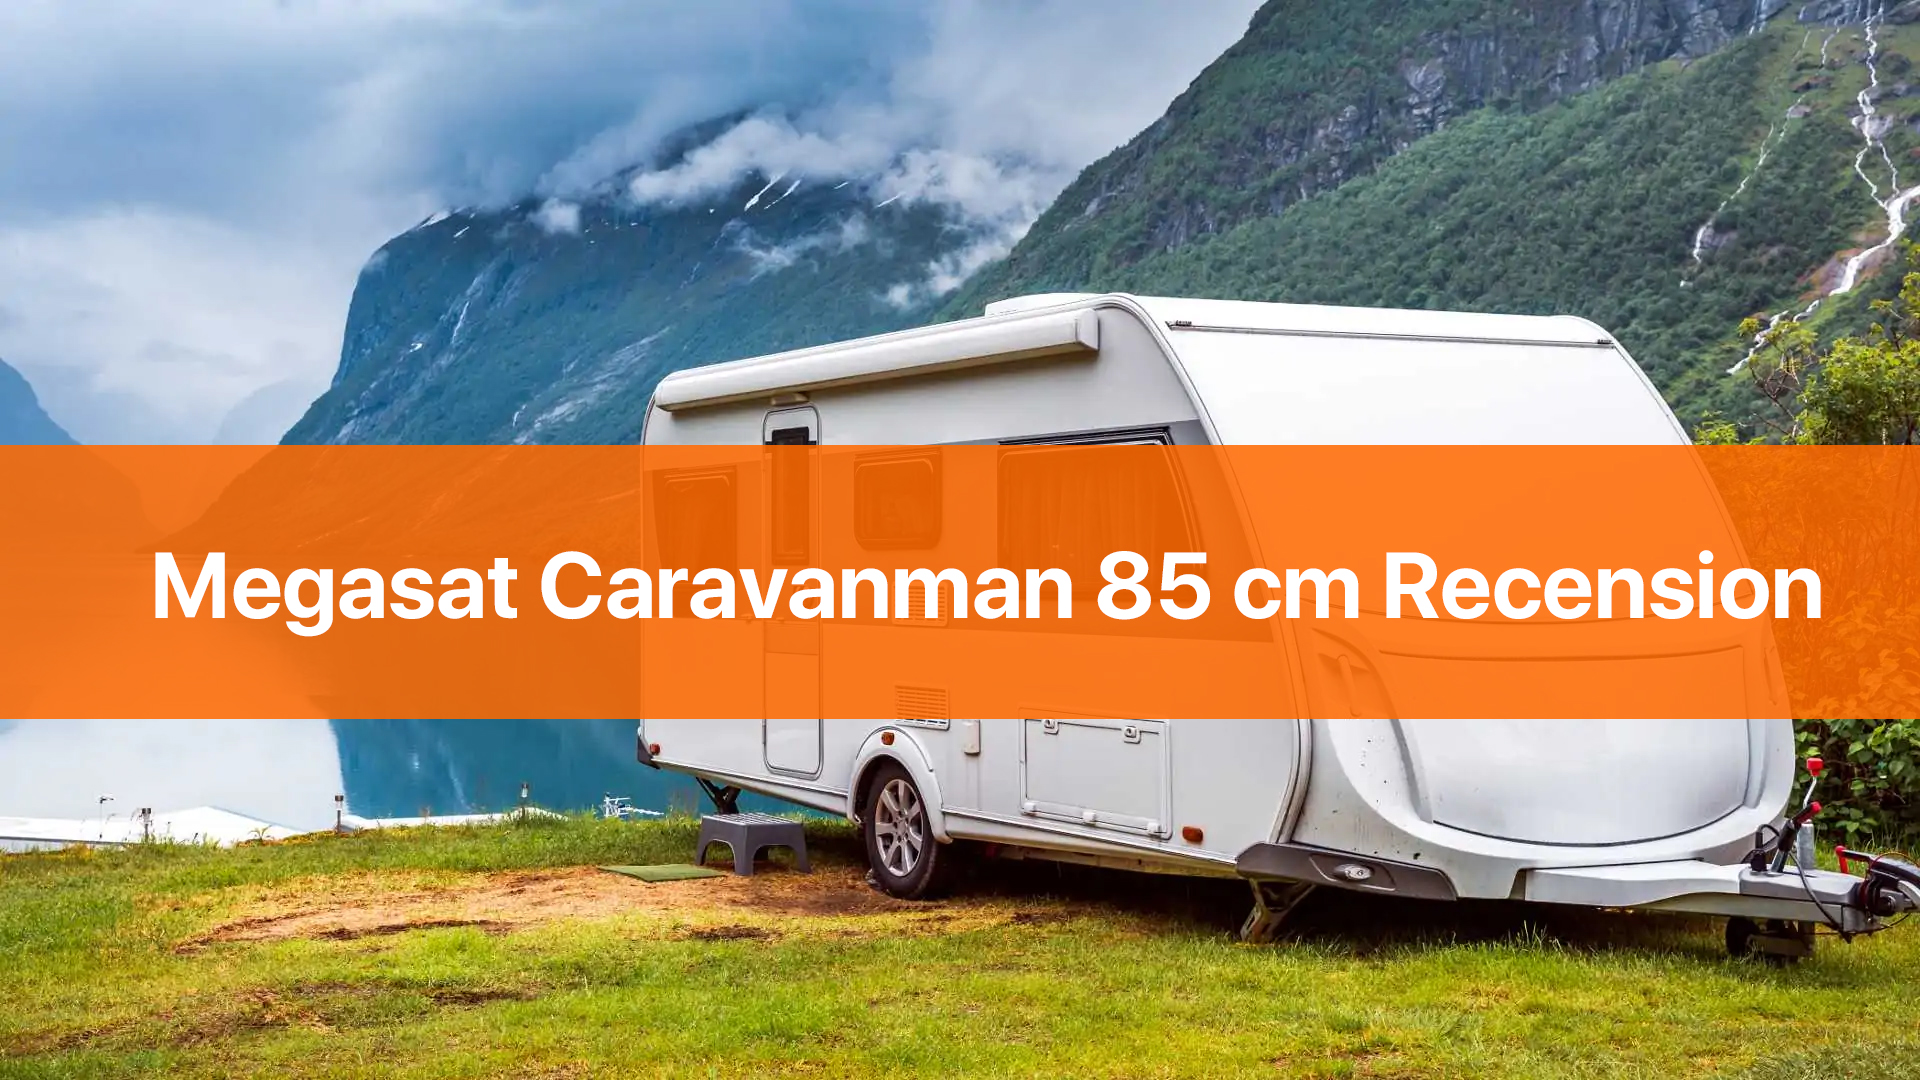 Megasat Caravanman 85 cm Recension 2022 1